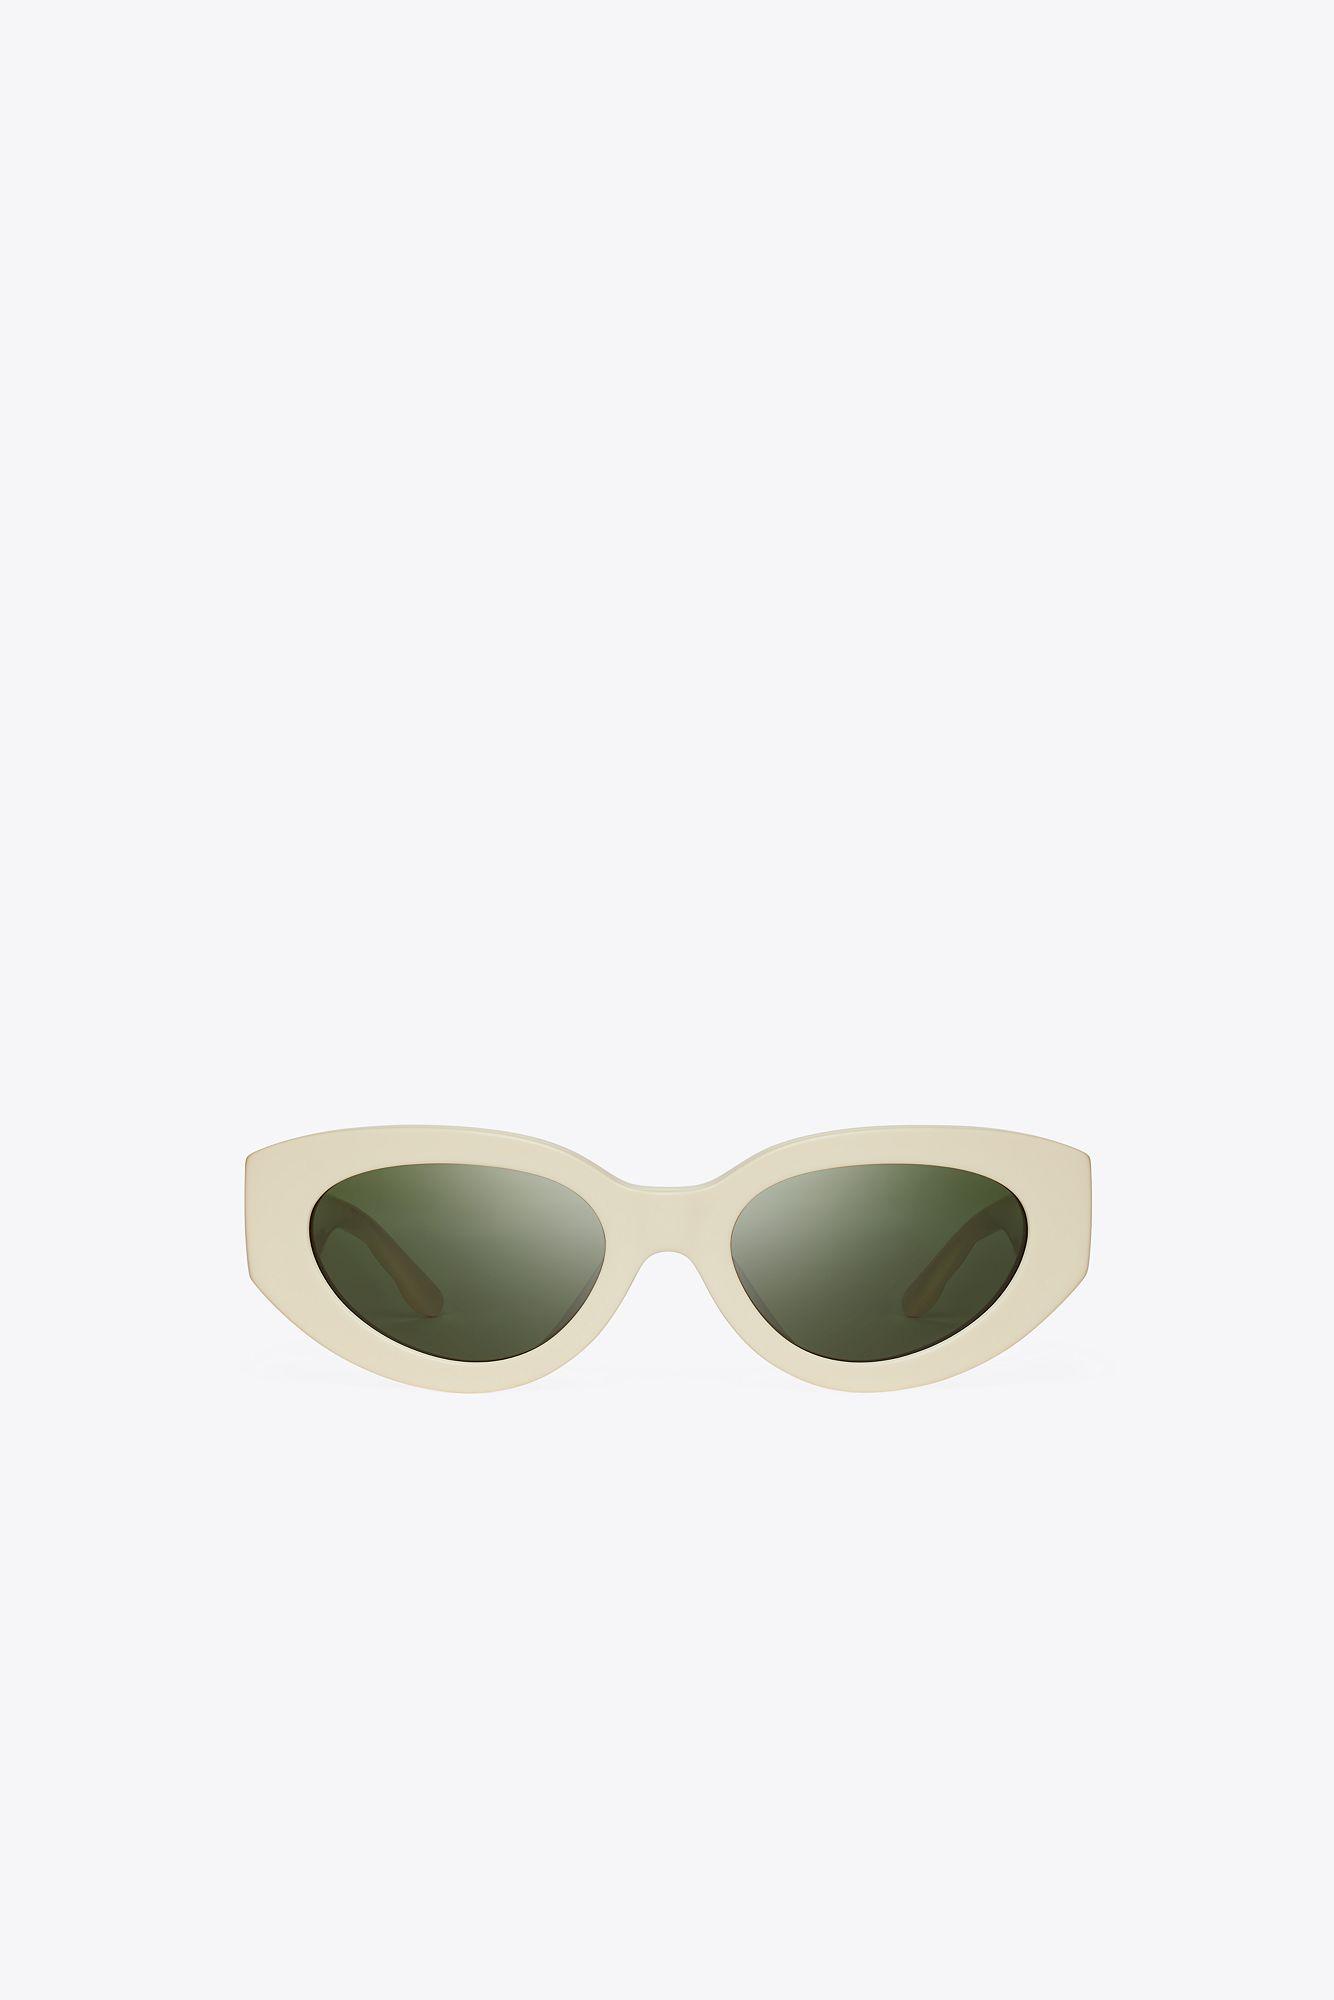 Tory Burch Kira Cat-eye Sunglasses in Green